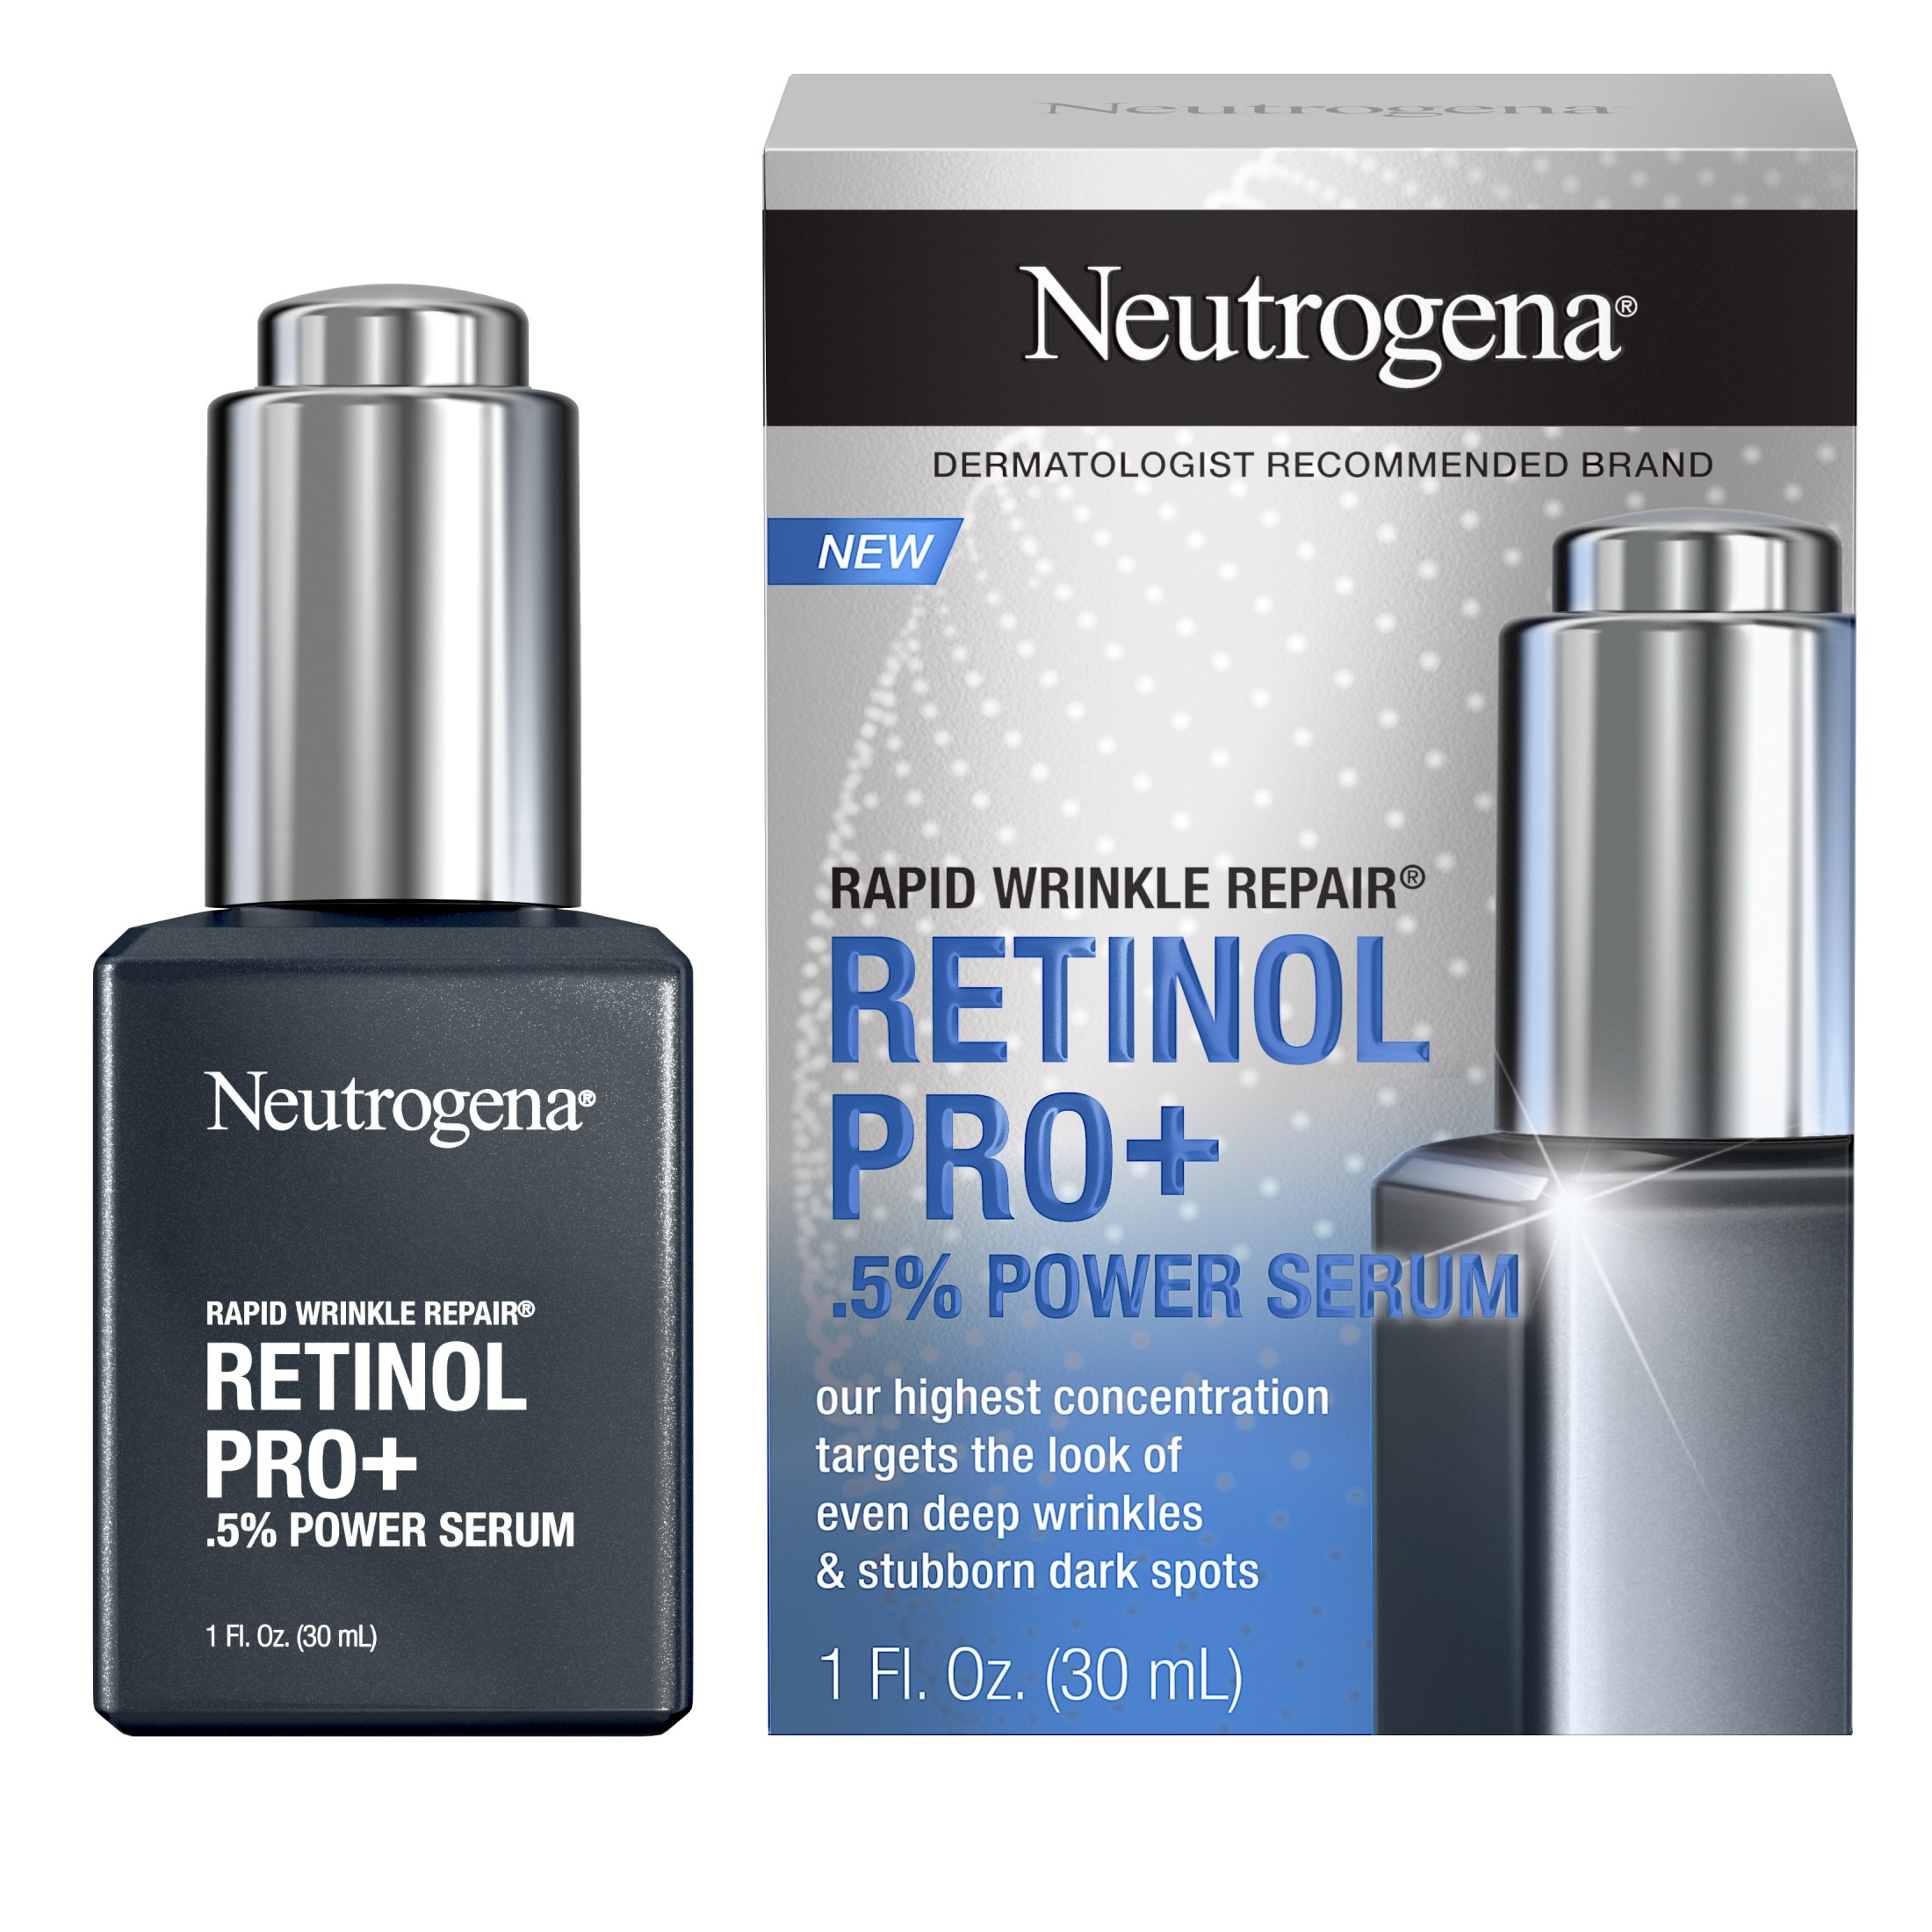 Neutrogena Rapid Wrinkle Repair Retinol Pro+.5% Power Serum, 1 fl. oz - image 1 of 8